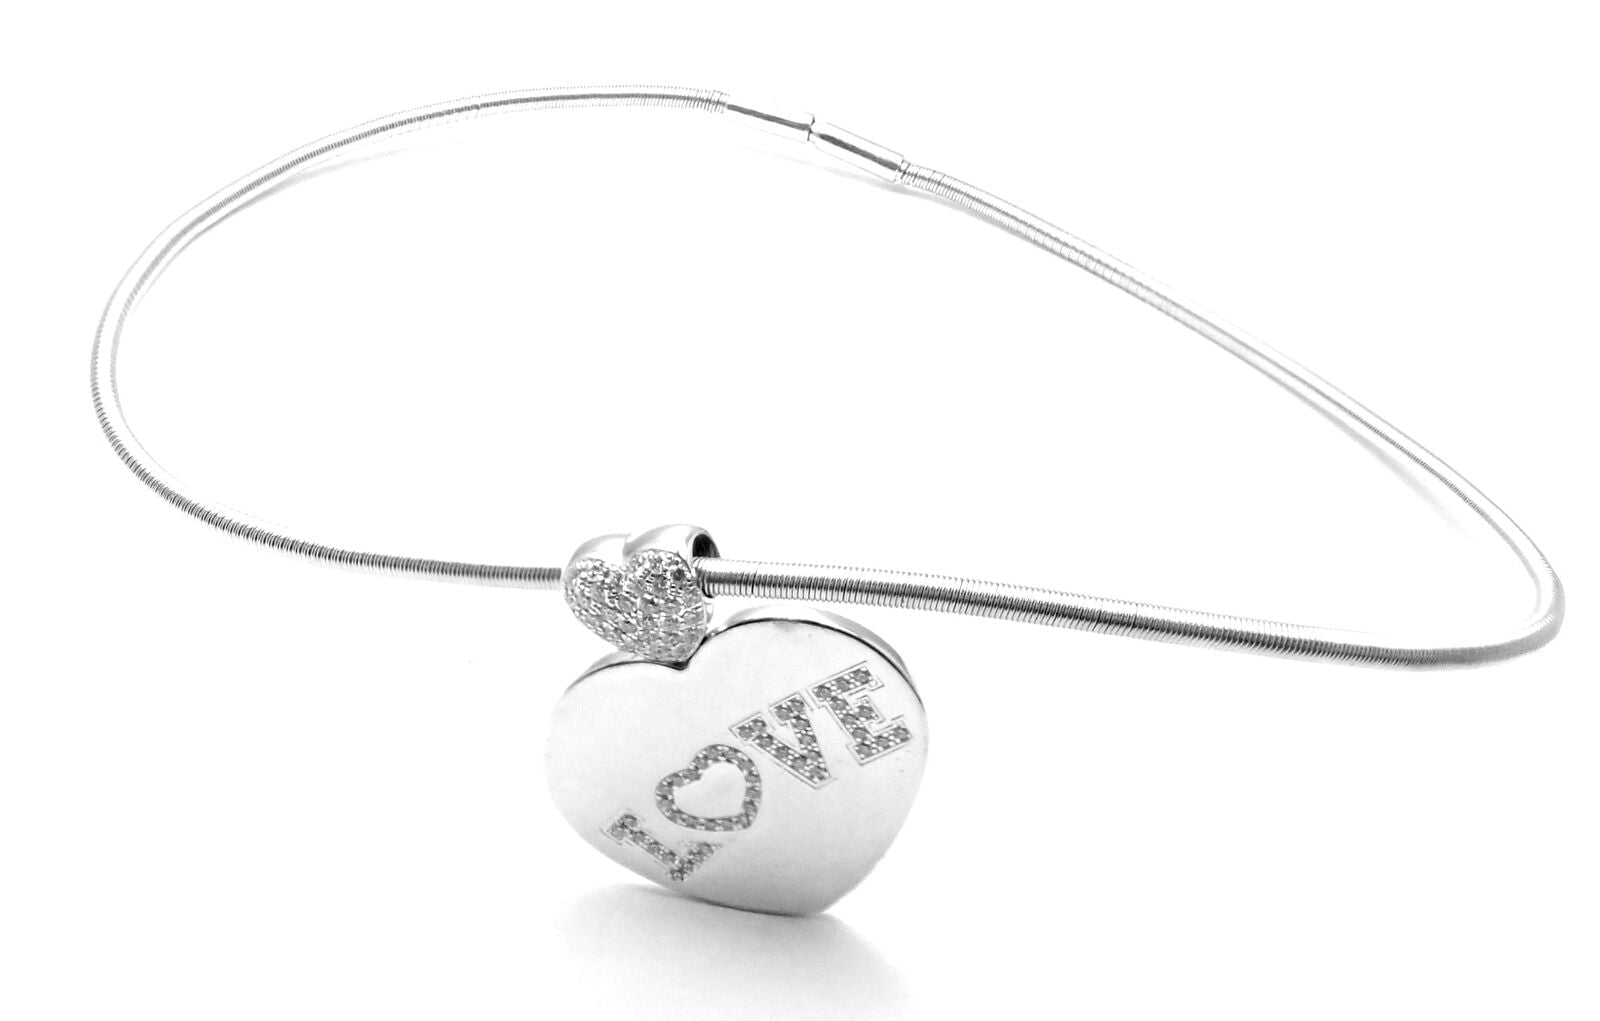 Estate Jewelry & Watches:Fine Jewelry:Necklaces & Pendants Rare! Estate 18k White Gold Diamond Love Heart Pendant Necklace